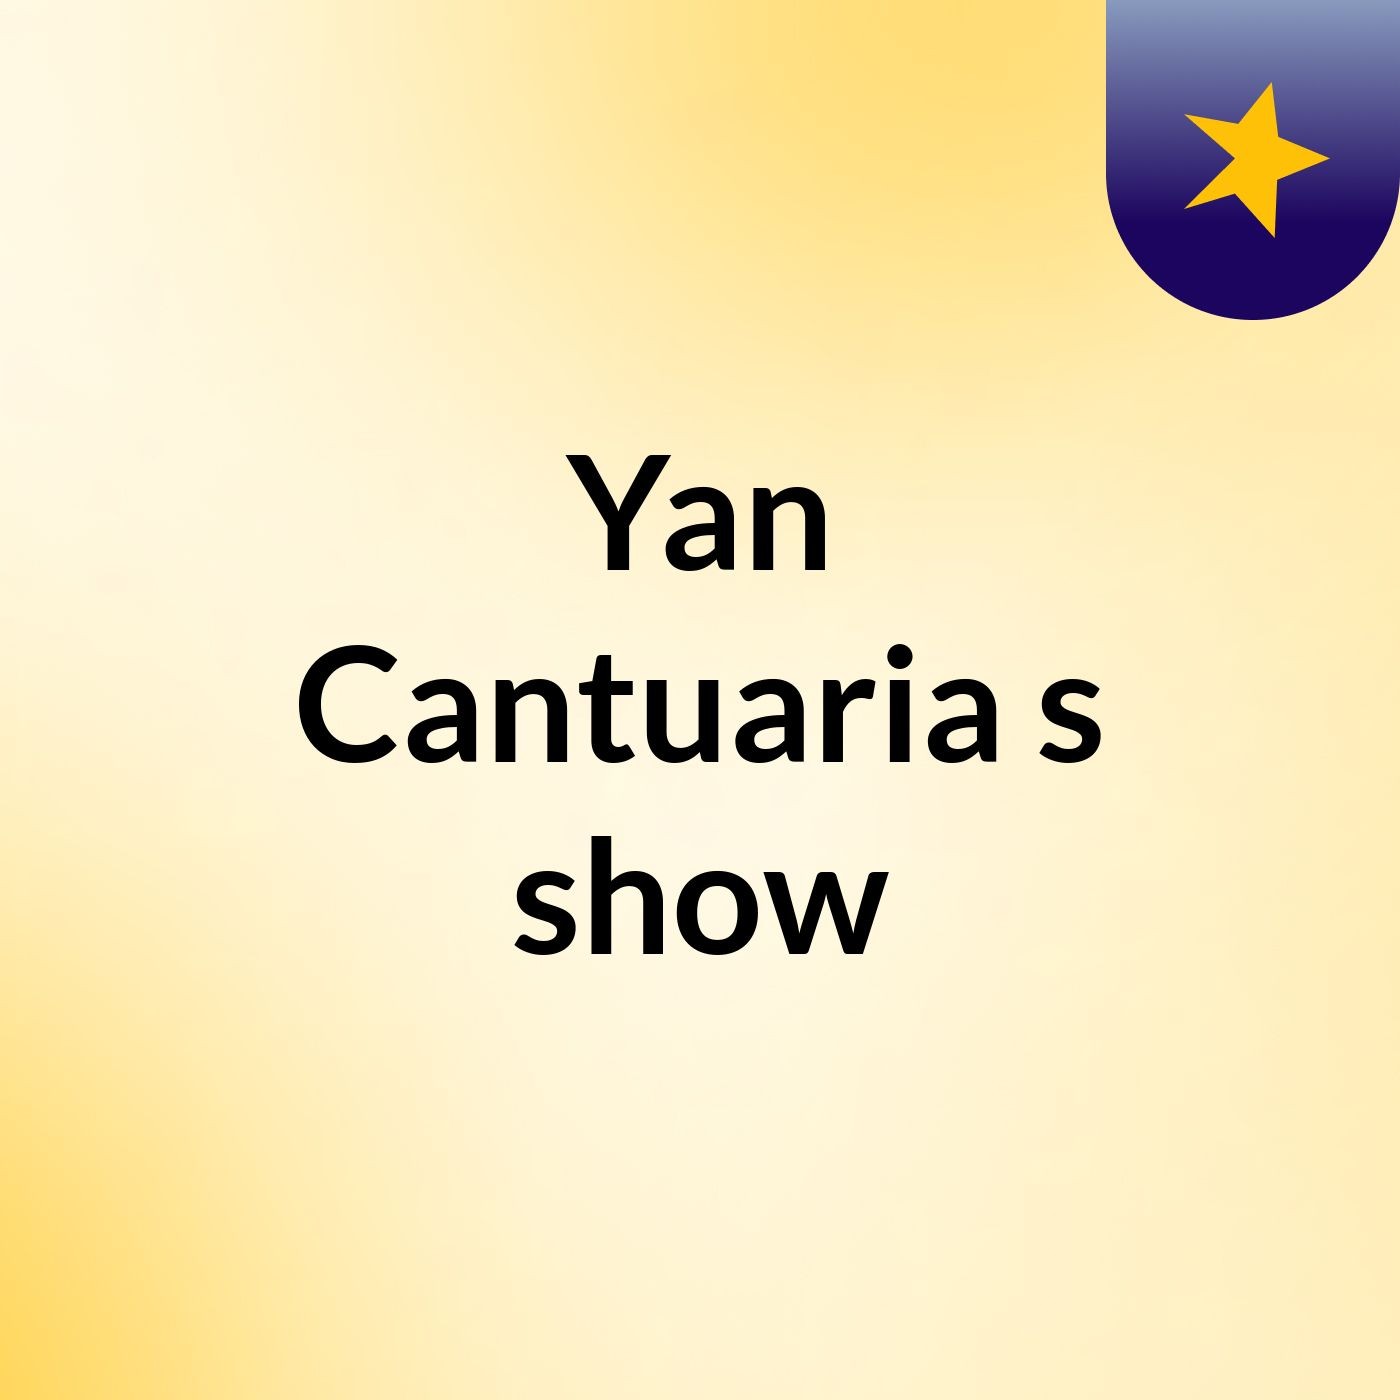 Yan Cantuaria's show